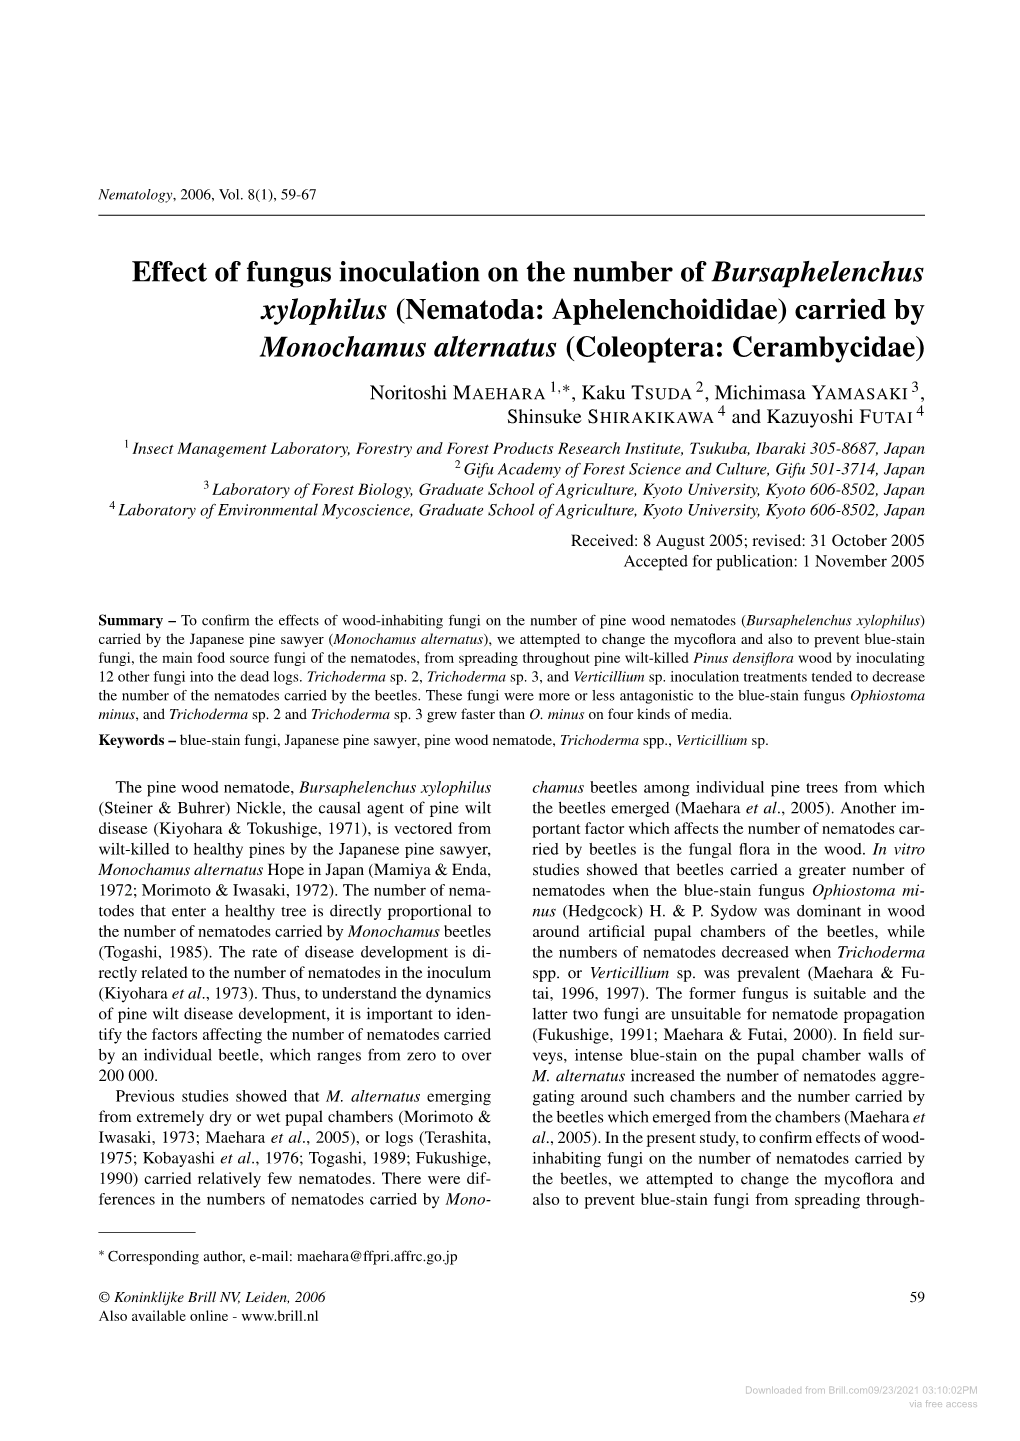 Effect of Fungus Inoculation on the Number of &lt;I&gt;Bursaphelenchus